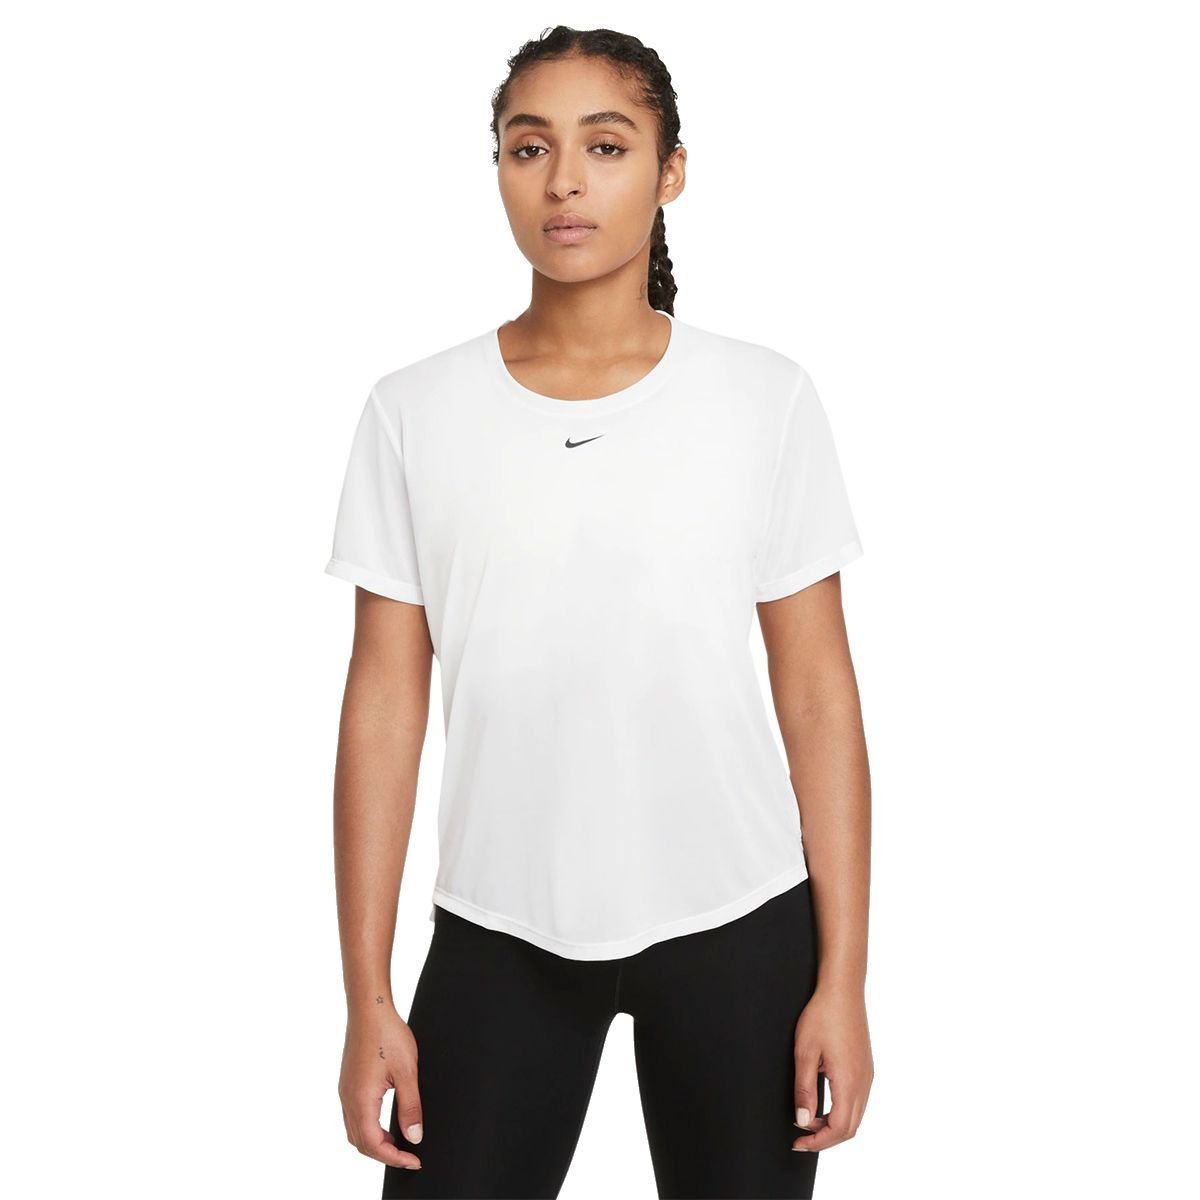 Camiseta Nike Dri-FIT One Feminina - Preto